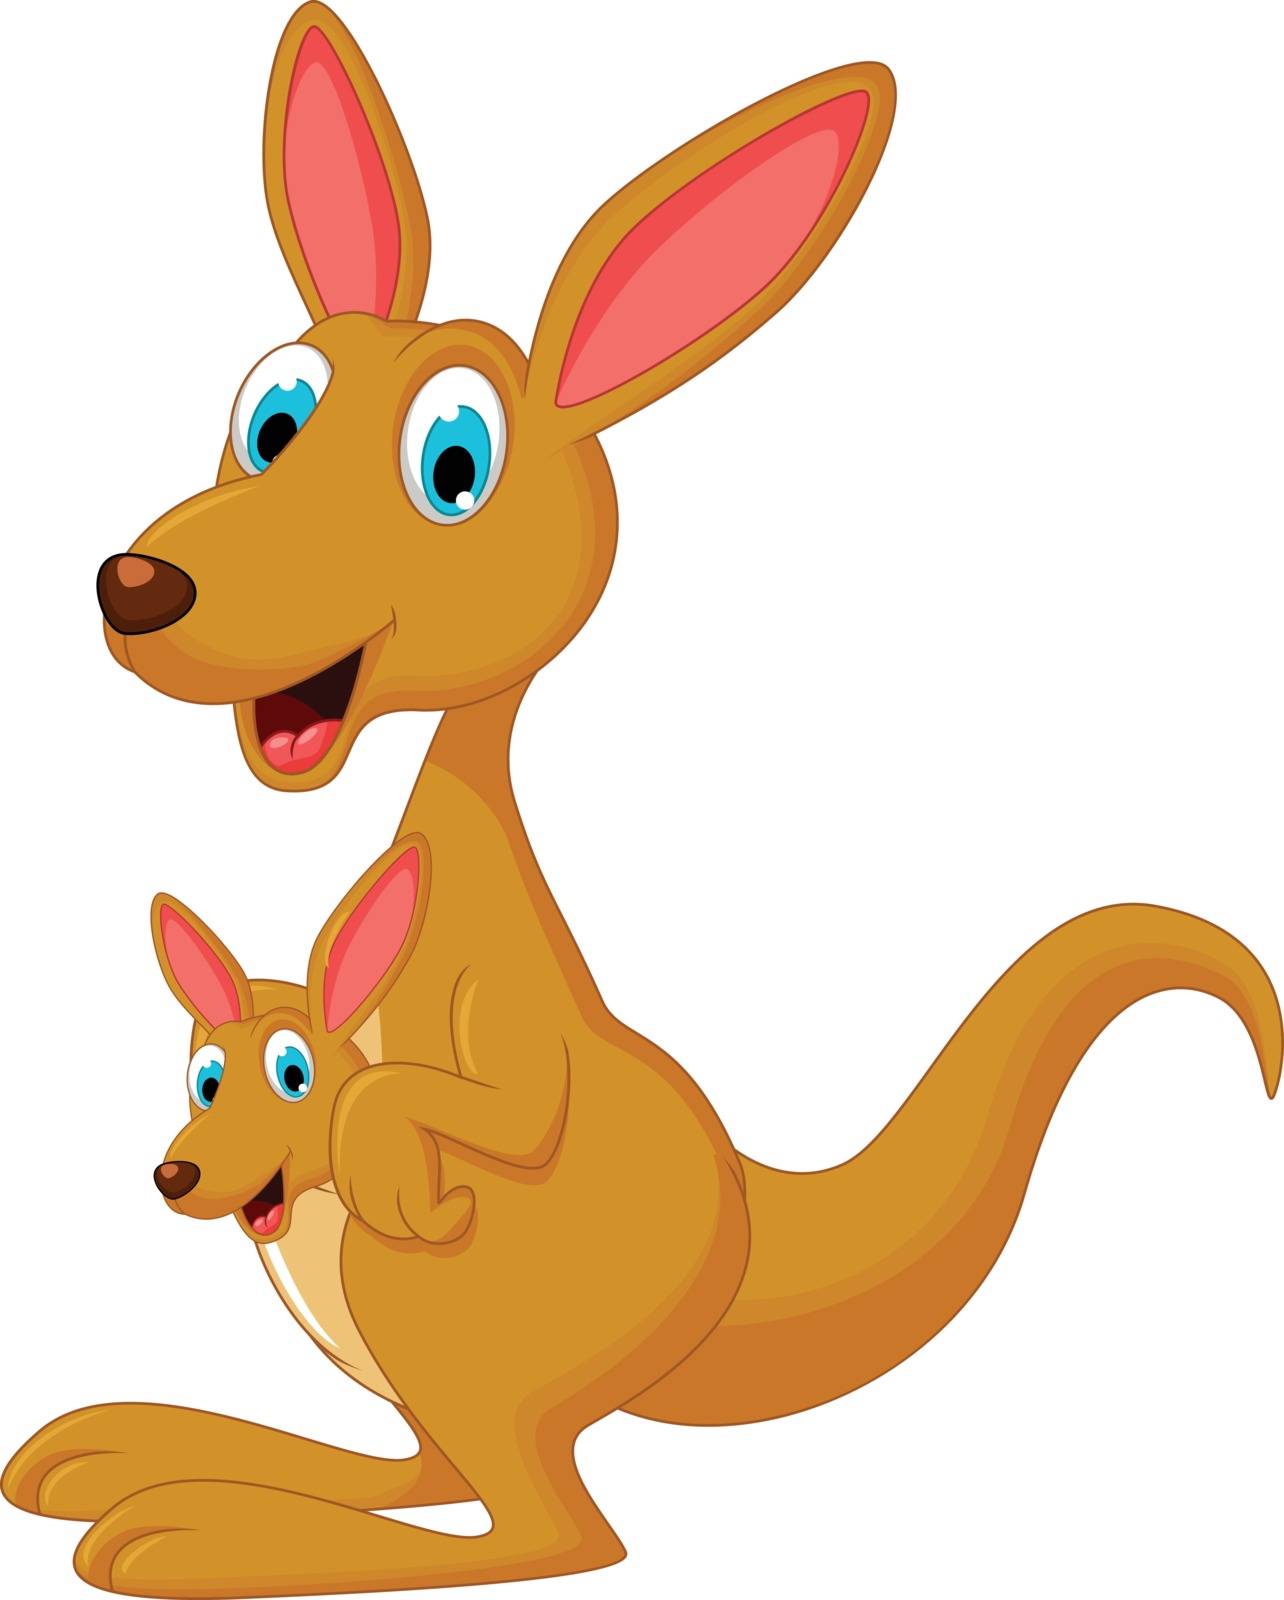 vector illustration of cute cartoon kangaroo carrying a cute Joey